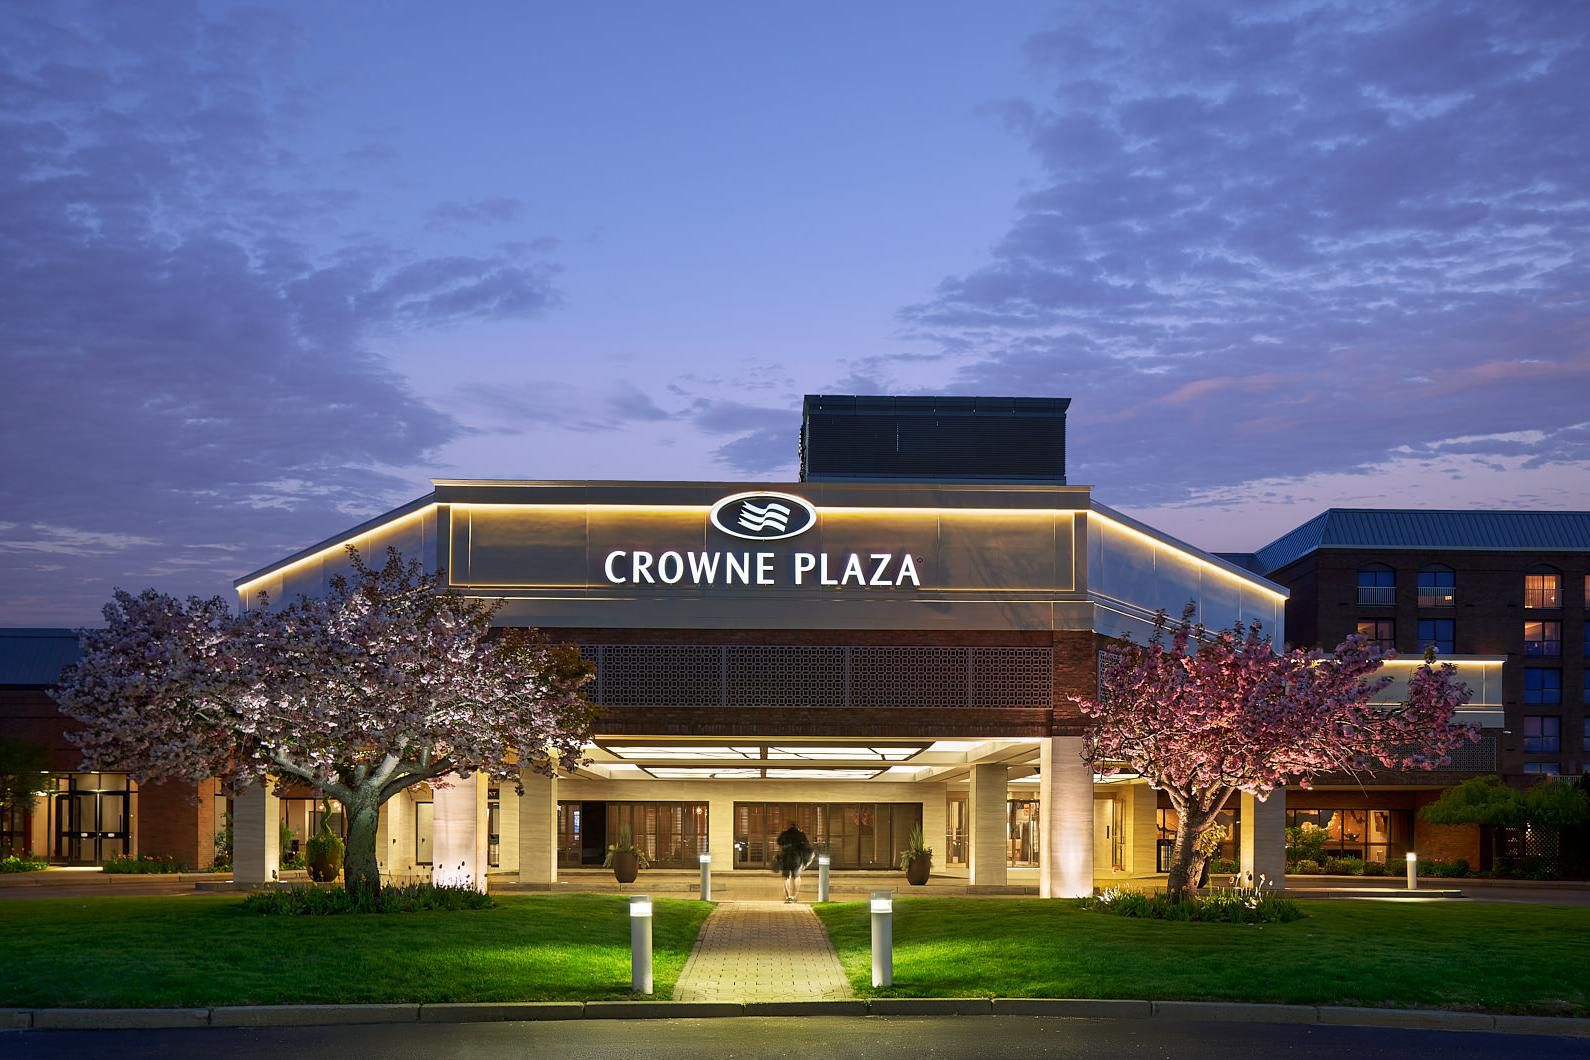 Crowne Plaza at dusk